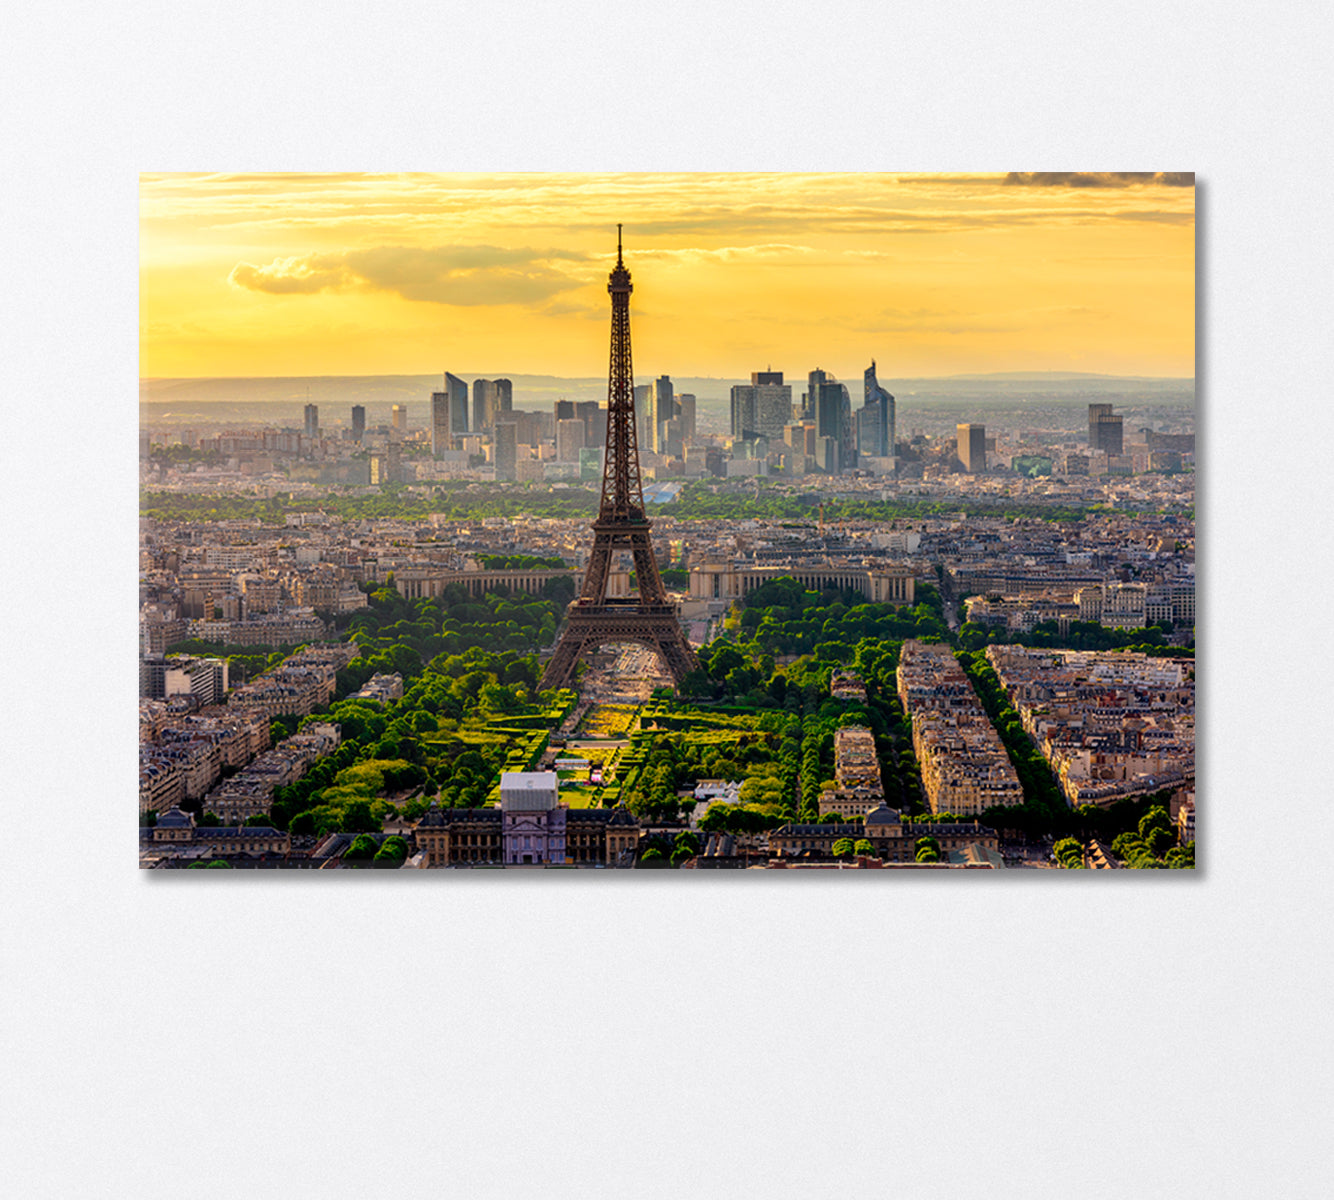 Skyline of Paris with Eiffel Tower at Sunset Canvas Print-Canvas Print-CetArt-1 Panel-24x16 inches-CetArt